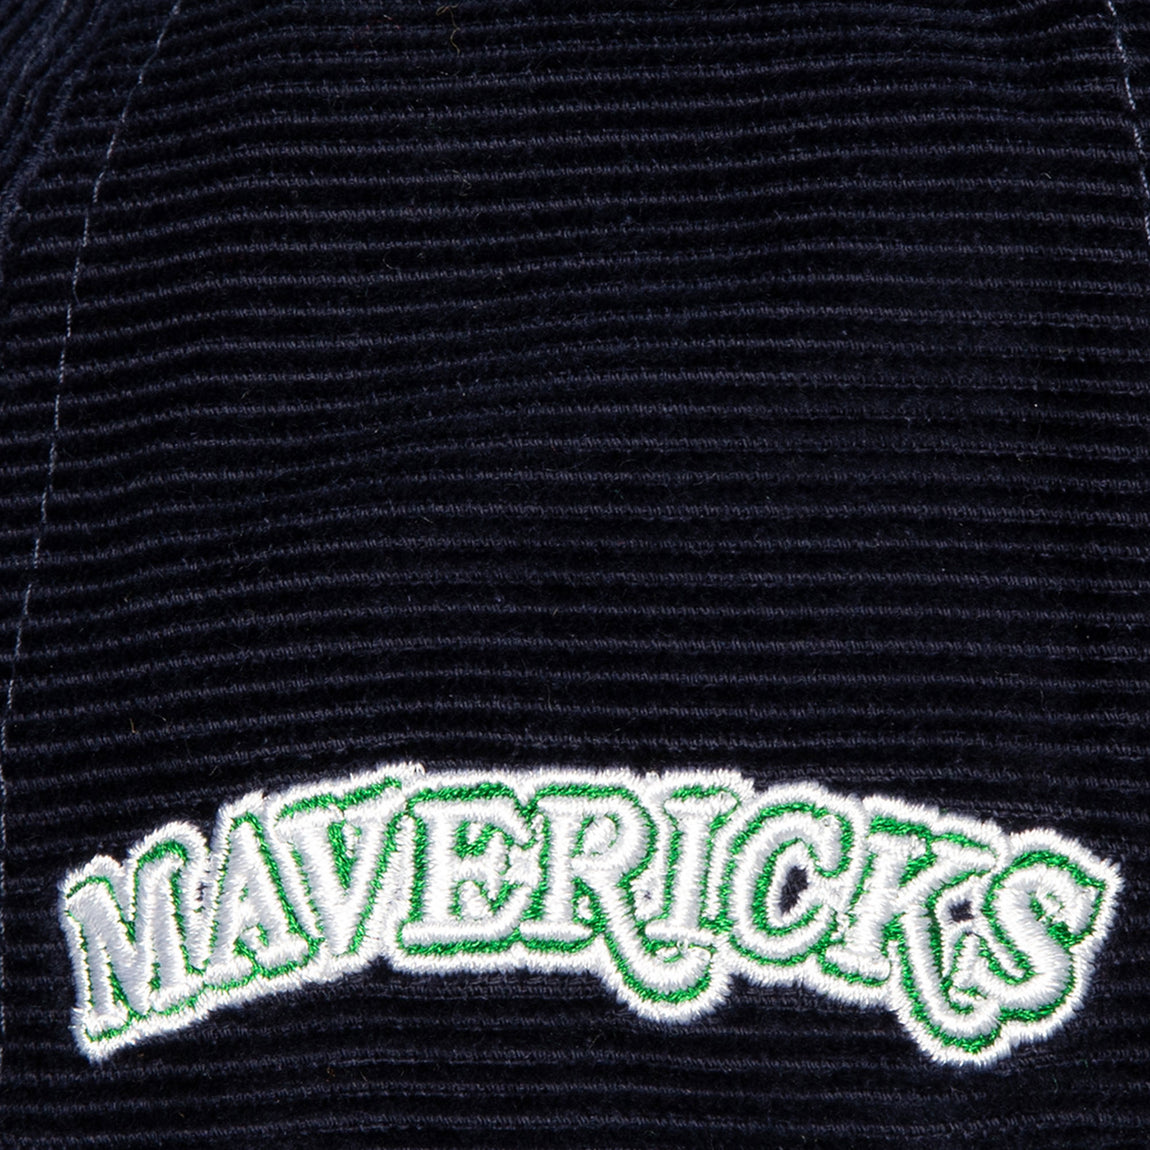 Mitchell & Ness Dallas Mavericks NBA Corduroy Hardwood Classics Snapback Hat ( Navy / Green ) - Mitchell & Ness Dallas Mavericks NBA Corduroy Hardwood Classics Snapback Hat ( Navy / Green ) - 